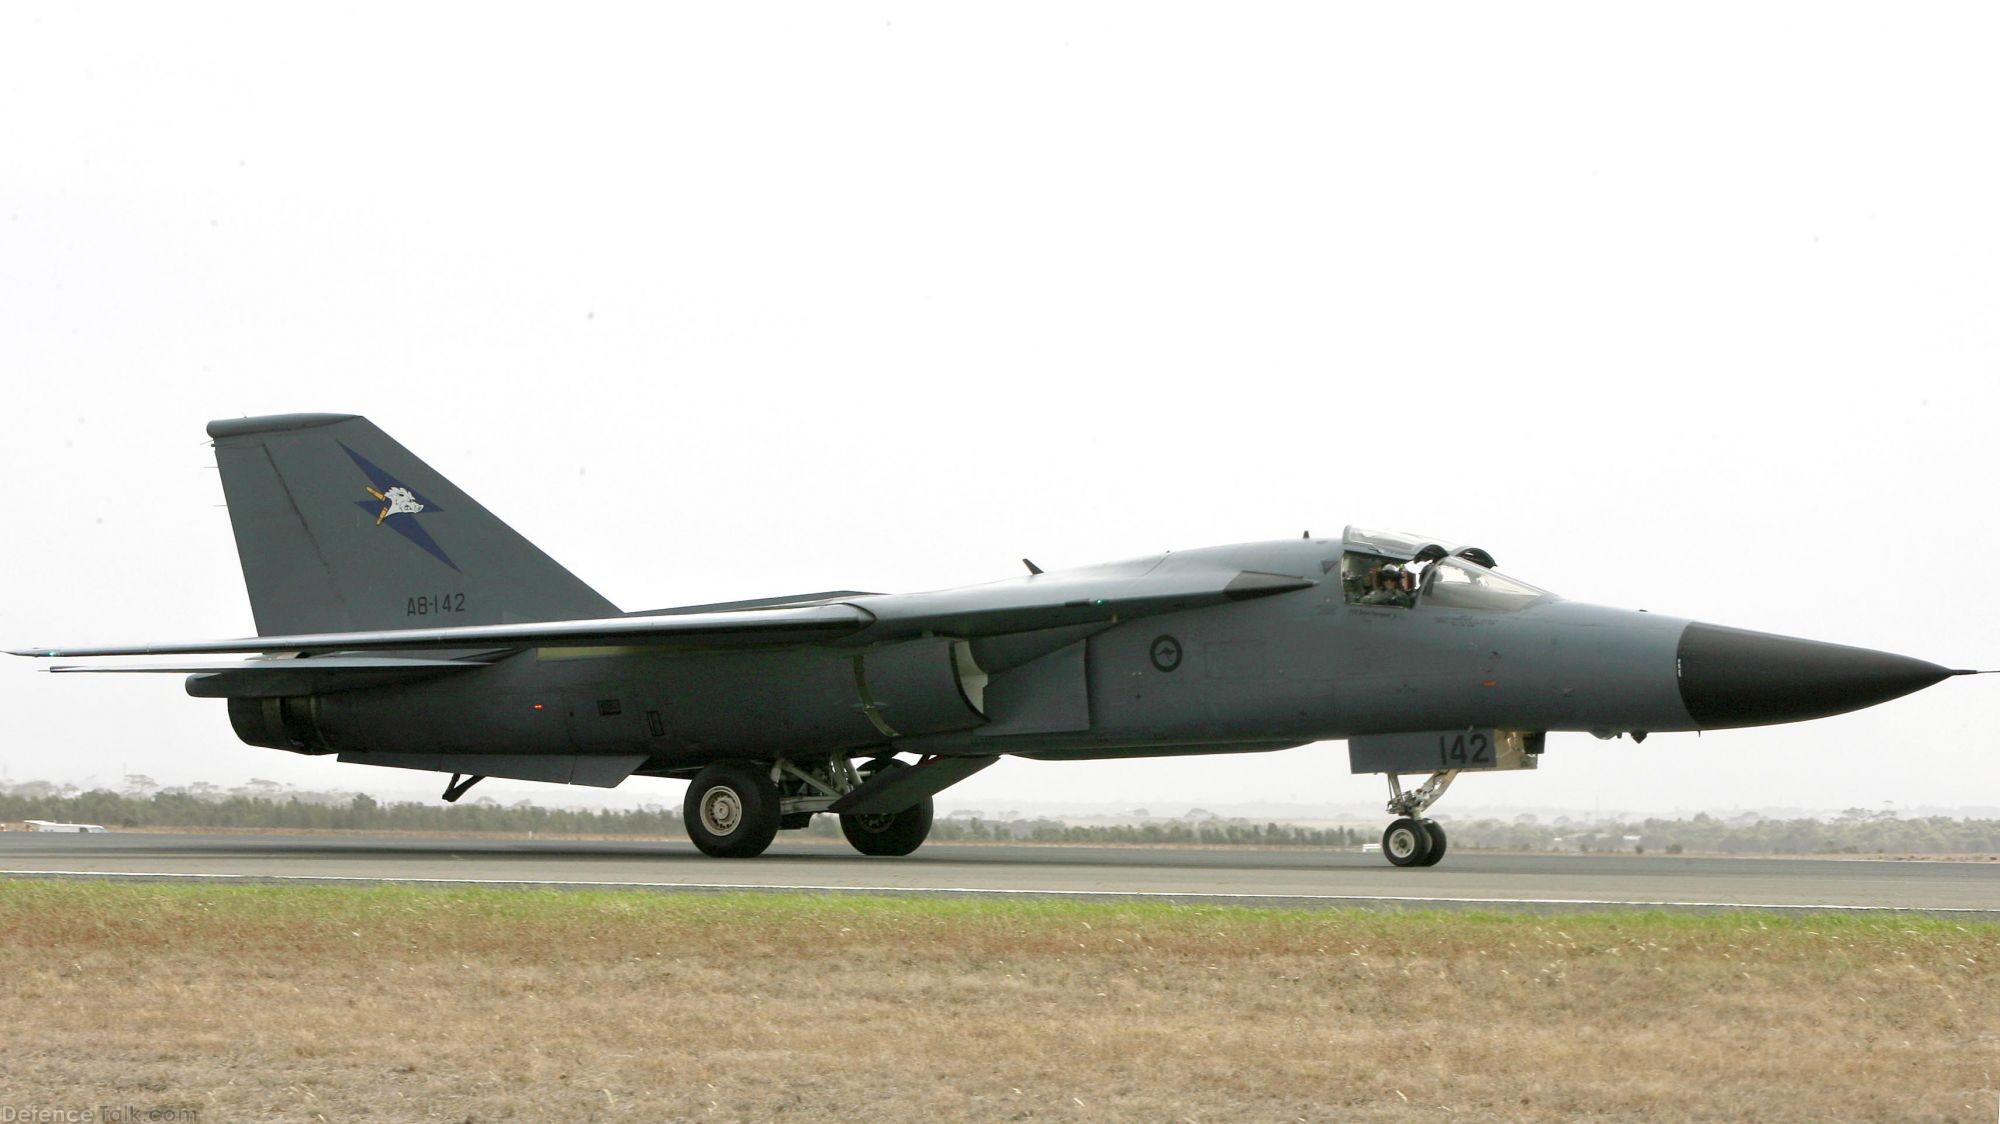 F-111 taxiing